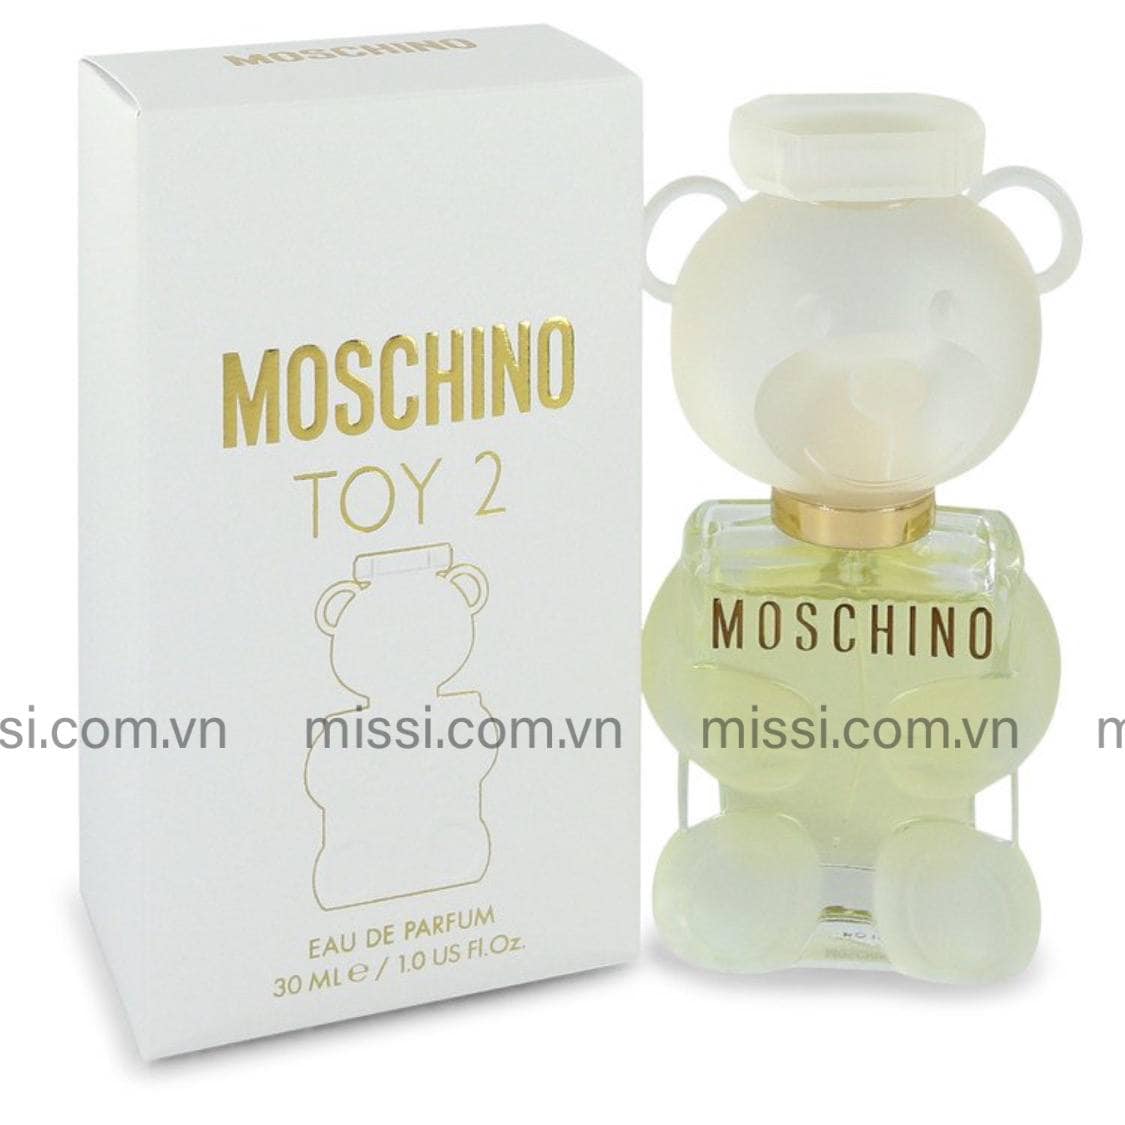 Moschino Toy 2 